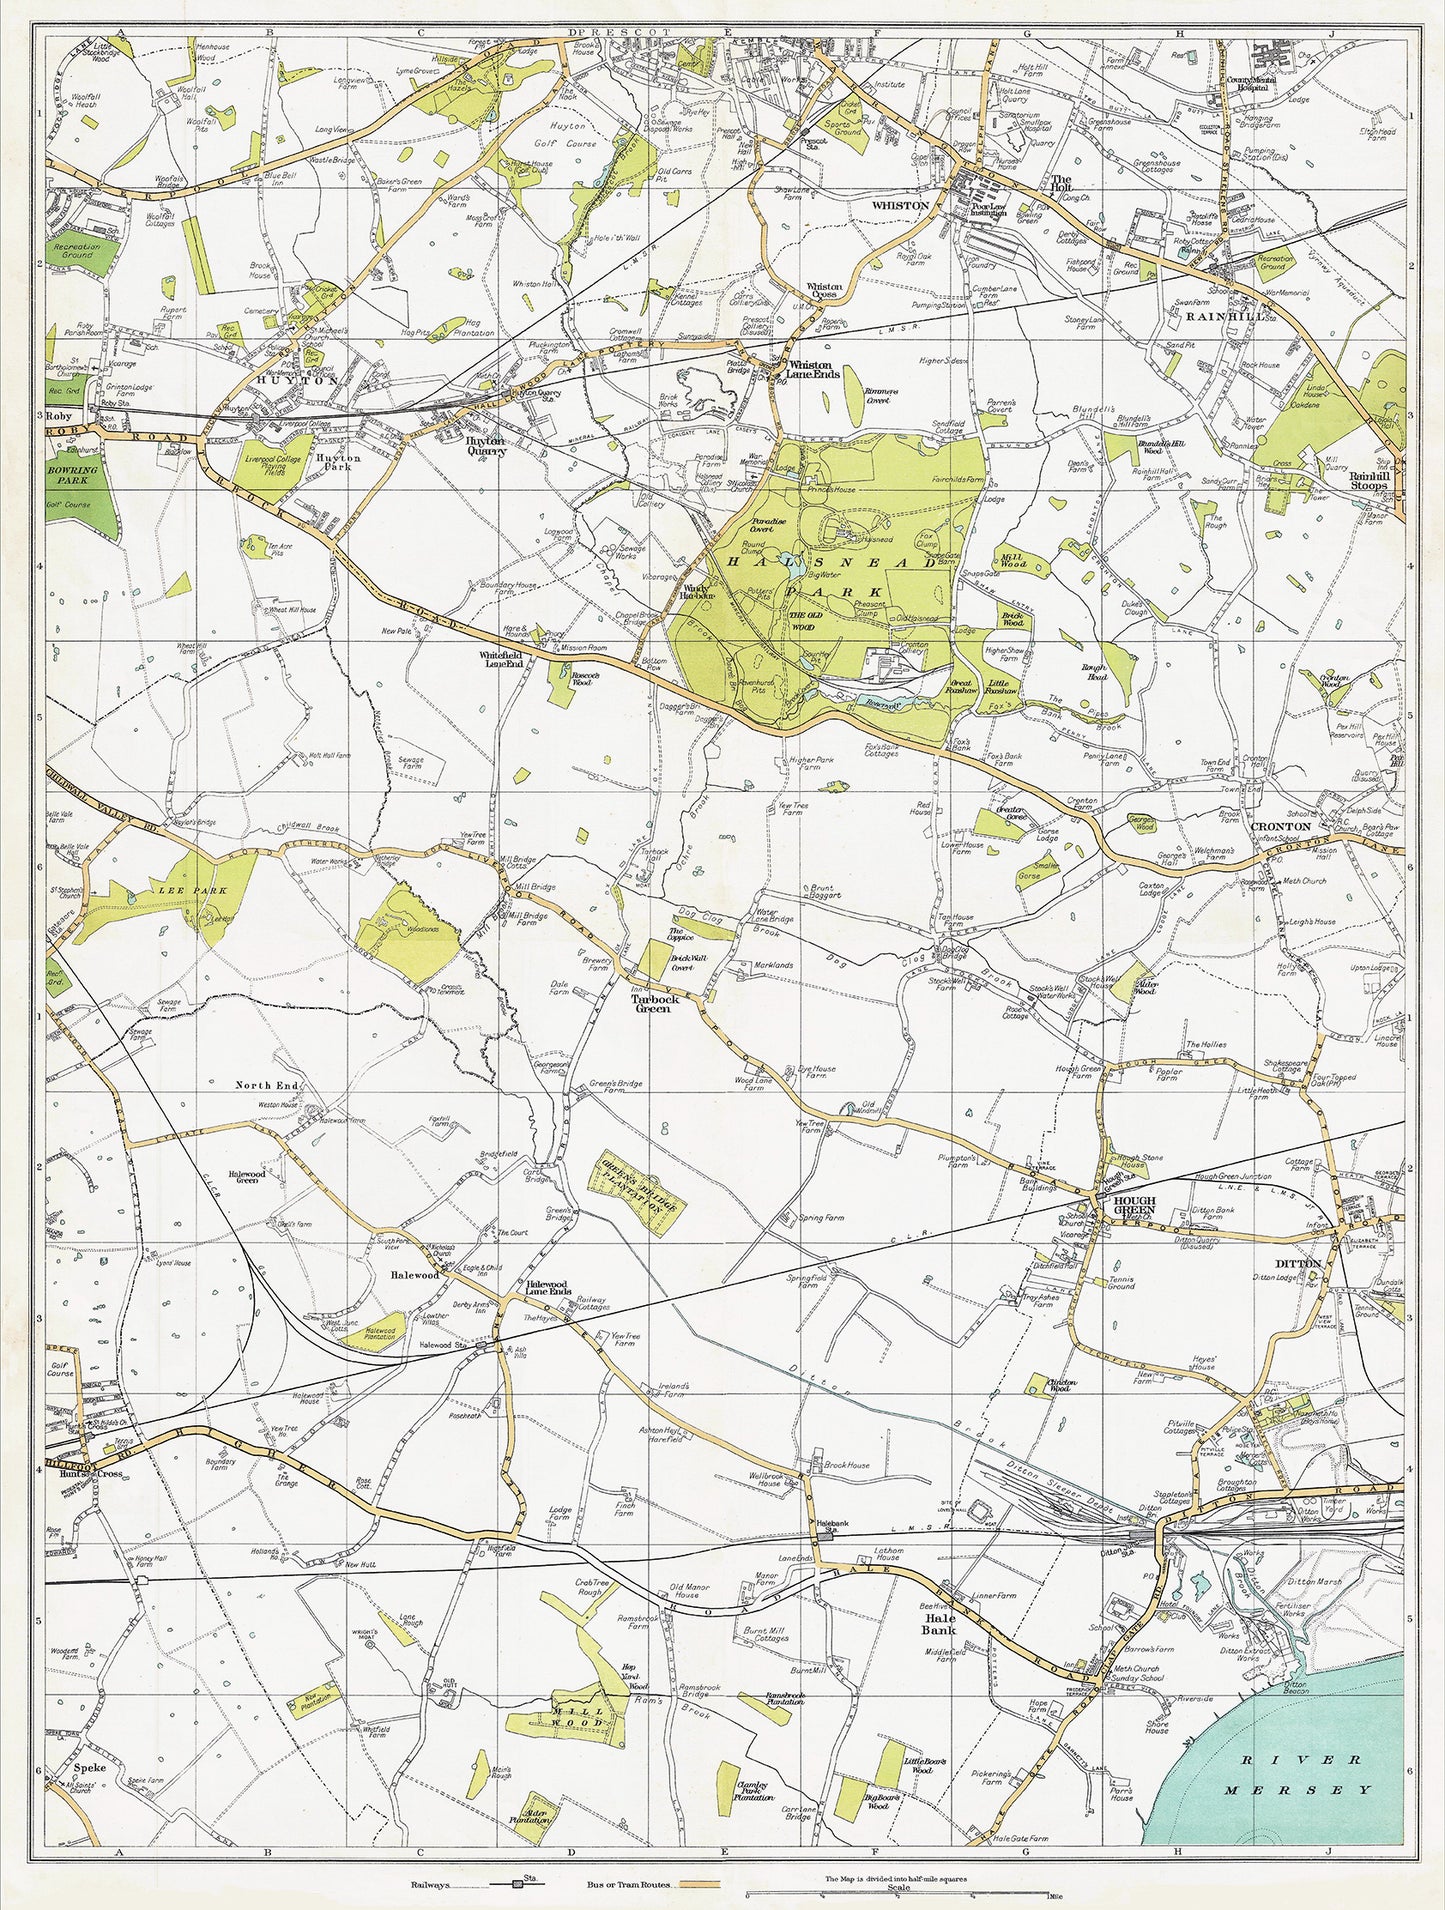 Lancashire (south) 1934 Series - Huyton, Hale Bank, Tarbock Green, Halsnead Park, Whiston, Prescot (south), Rainhill, Cronton, Hough Green, Ditton area - sheet 39